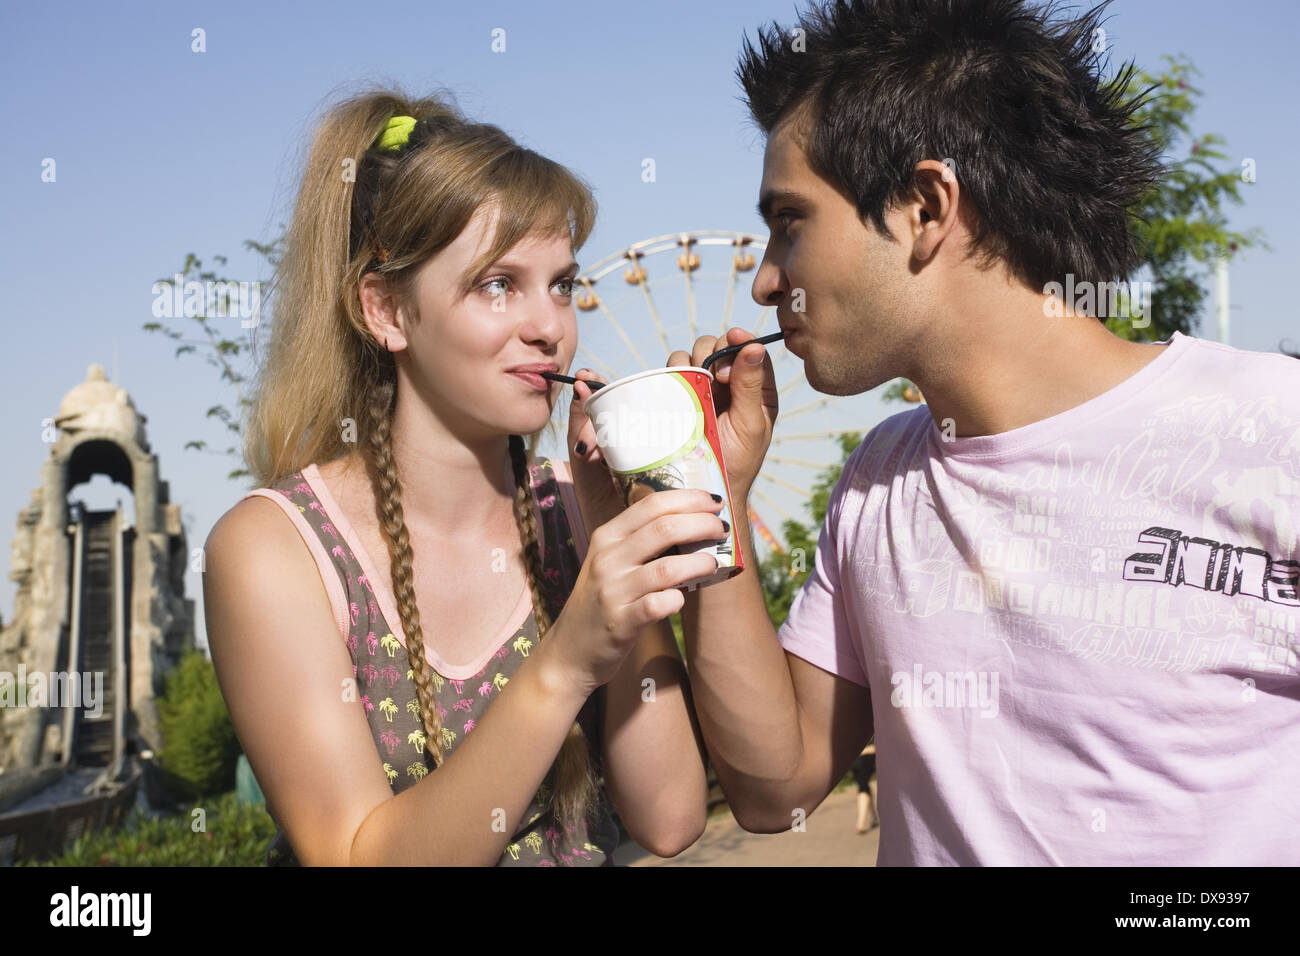 Teenage Couple Sharing A Soda Stockfoto Lizenzfreies Bild 678123